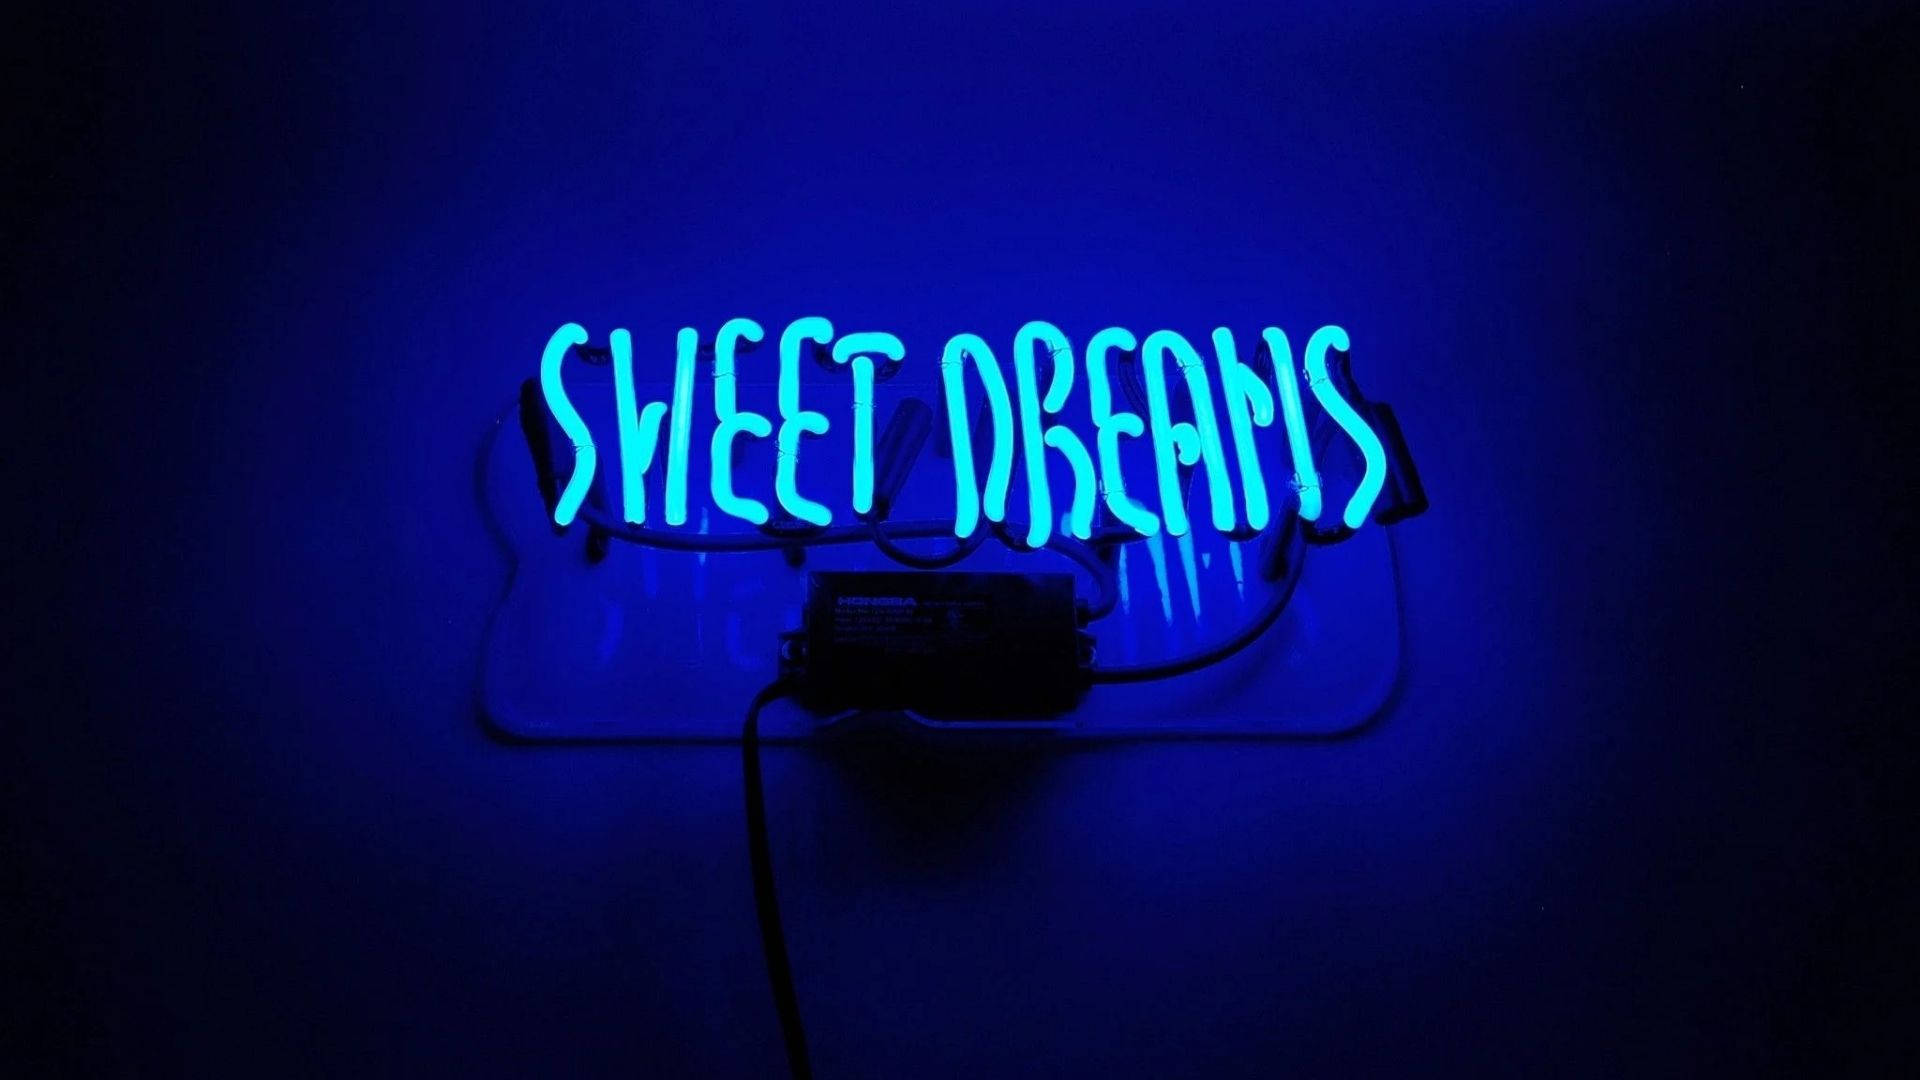 Sweet Dreams Led Light Background